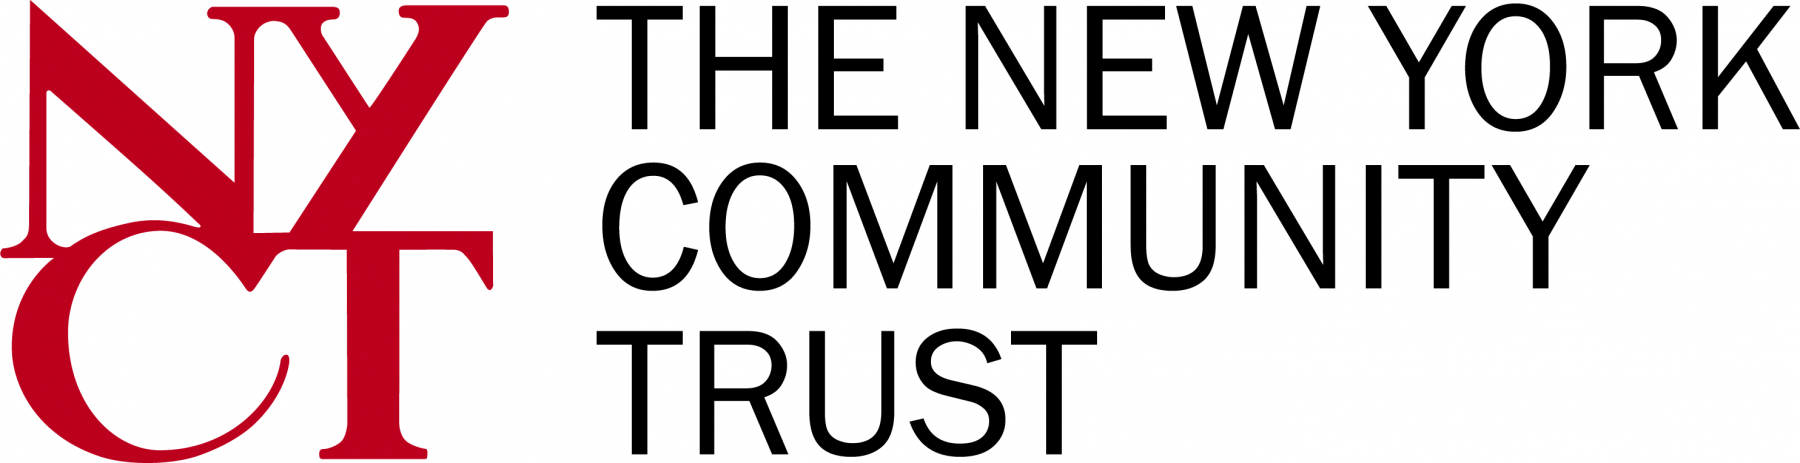 NYCT-New_StyleGuide_Logo